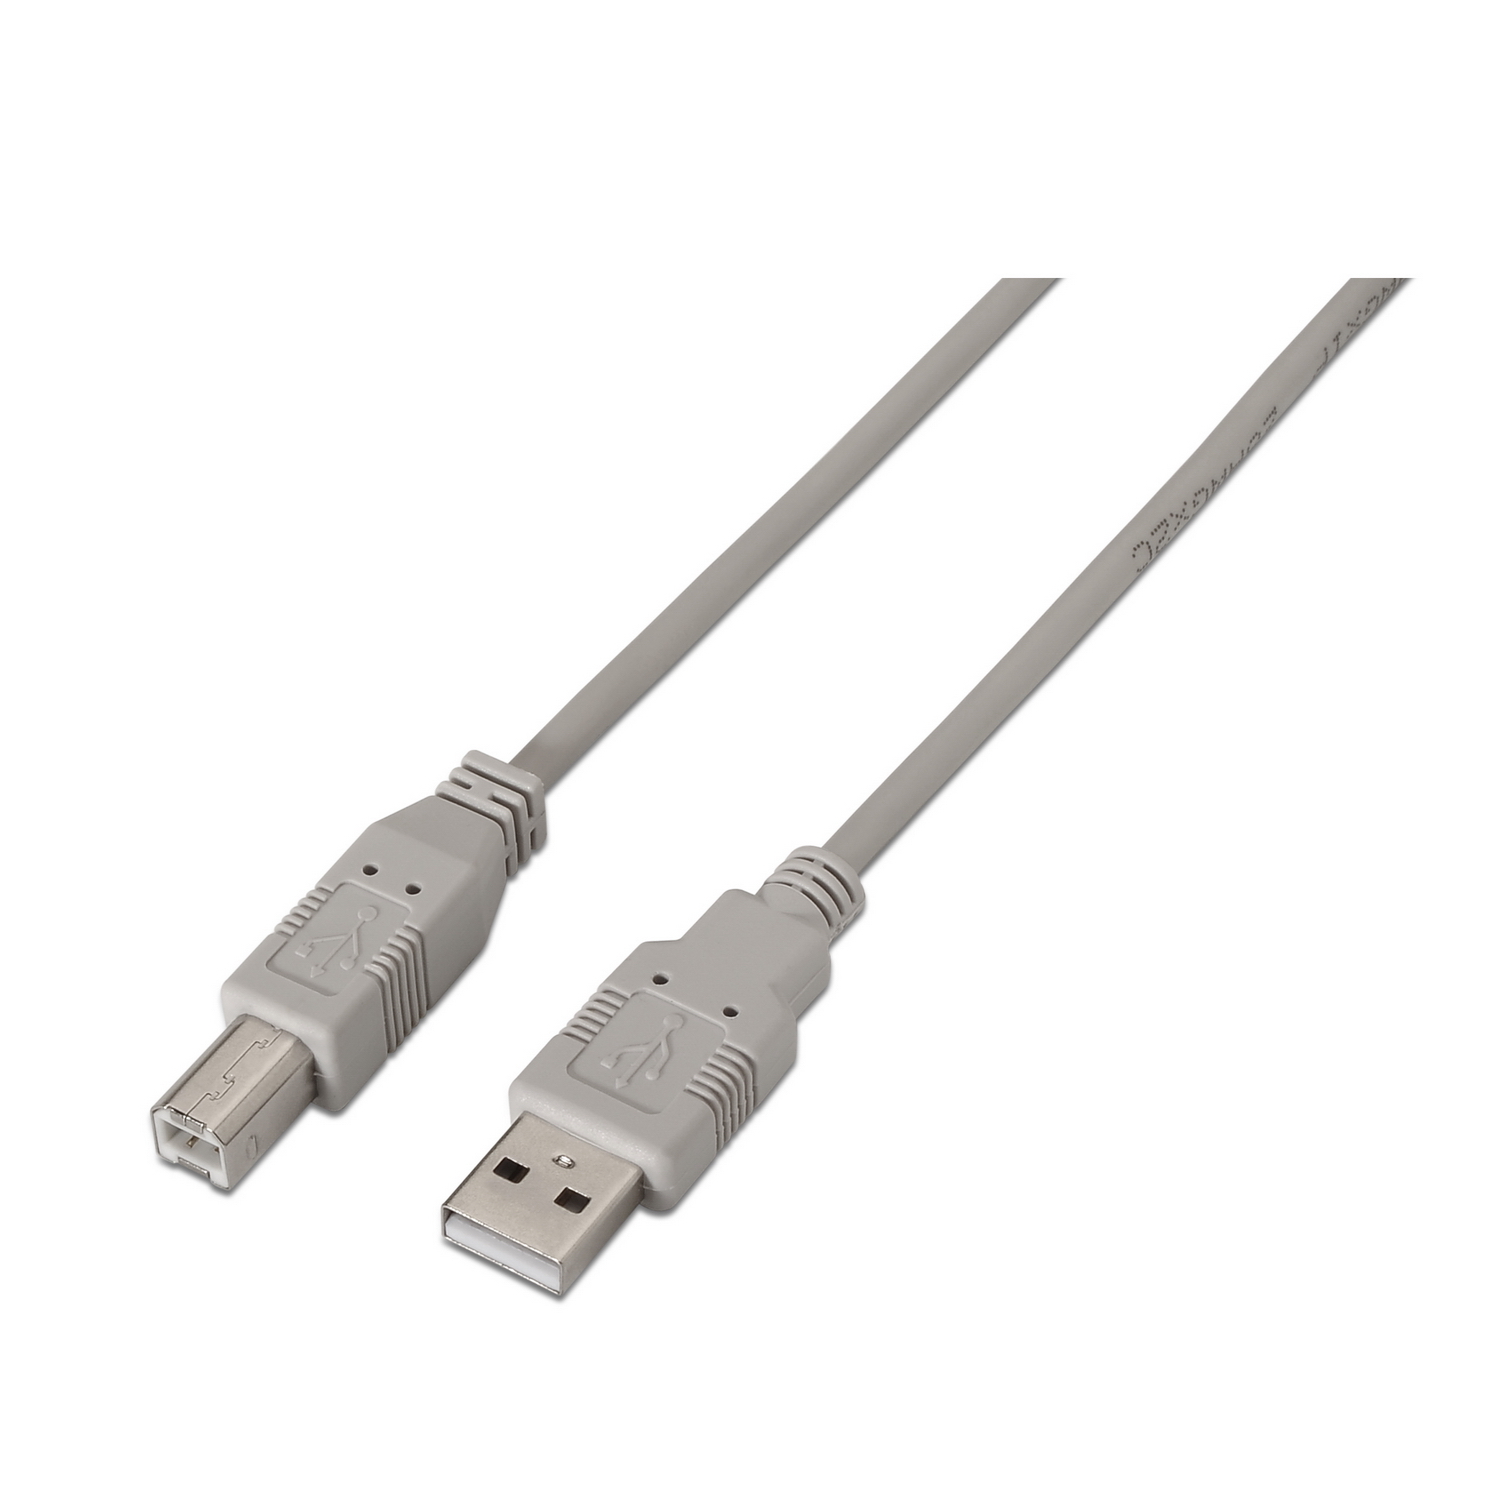 Aisens Cable USB 2.0 Impresora - Tipo A Macho a Tipo B Macho - 4.5m - Color Beige